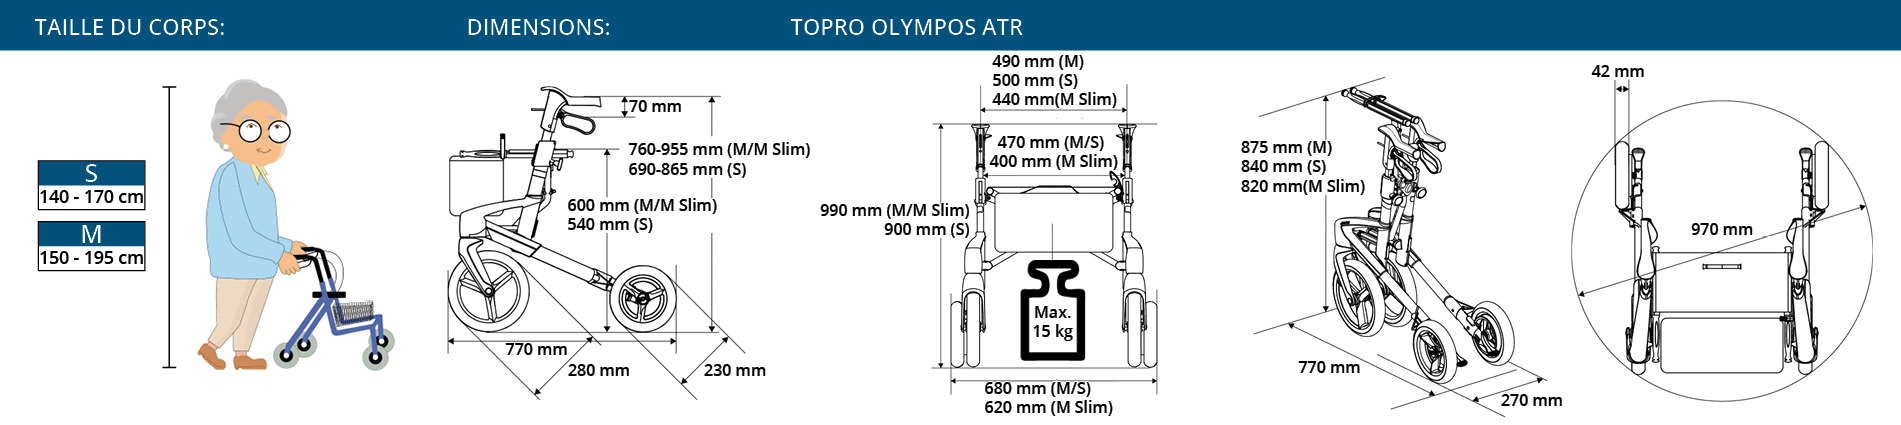 FR-Desktop-Technische-Daten-Topro-Olympos-ATR-Bildgrafik-Oma-Lenchen_1